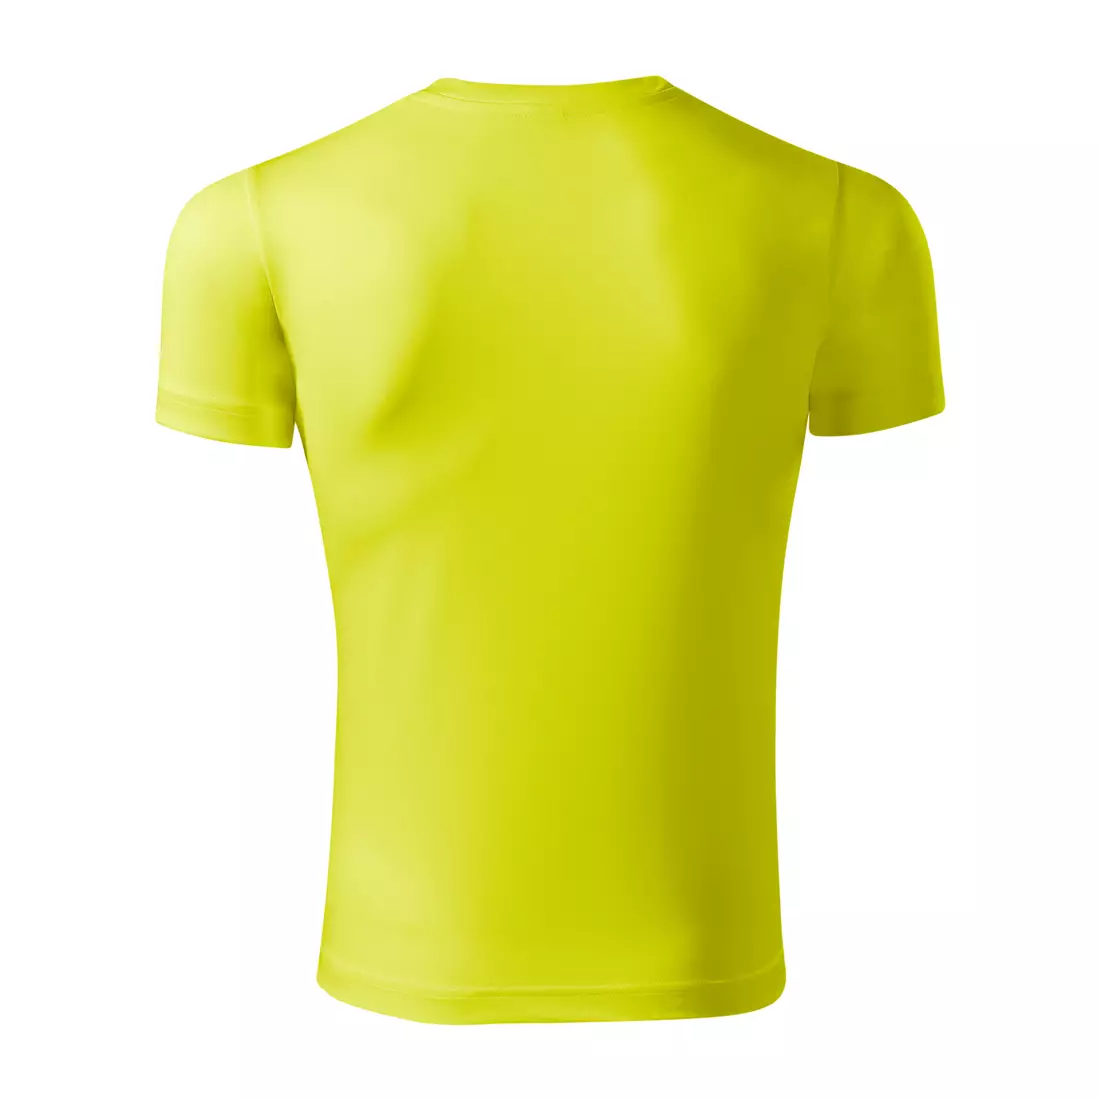 PICCOLIO PIXEL Tricou sport tip T-shirt, mânecă scurtă, bărbați, galben neon, 100 % poliester P819012